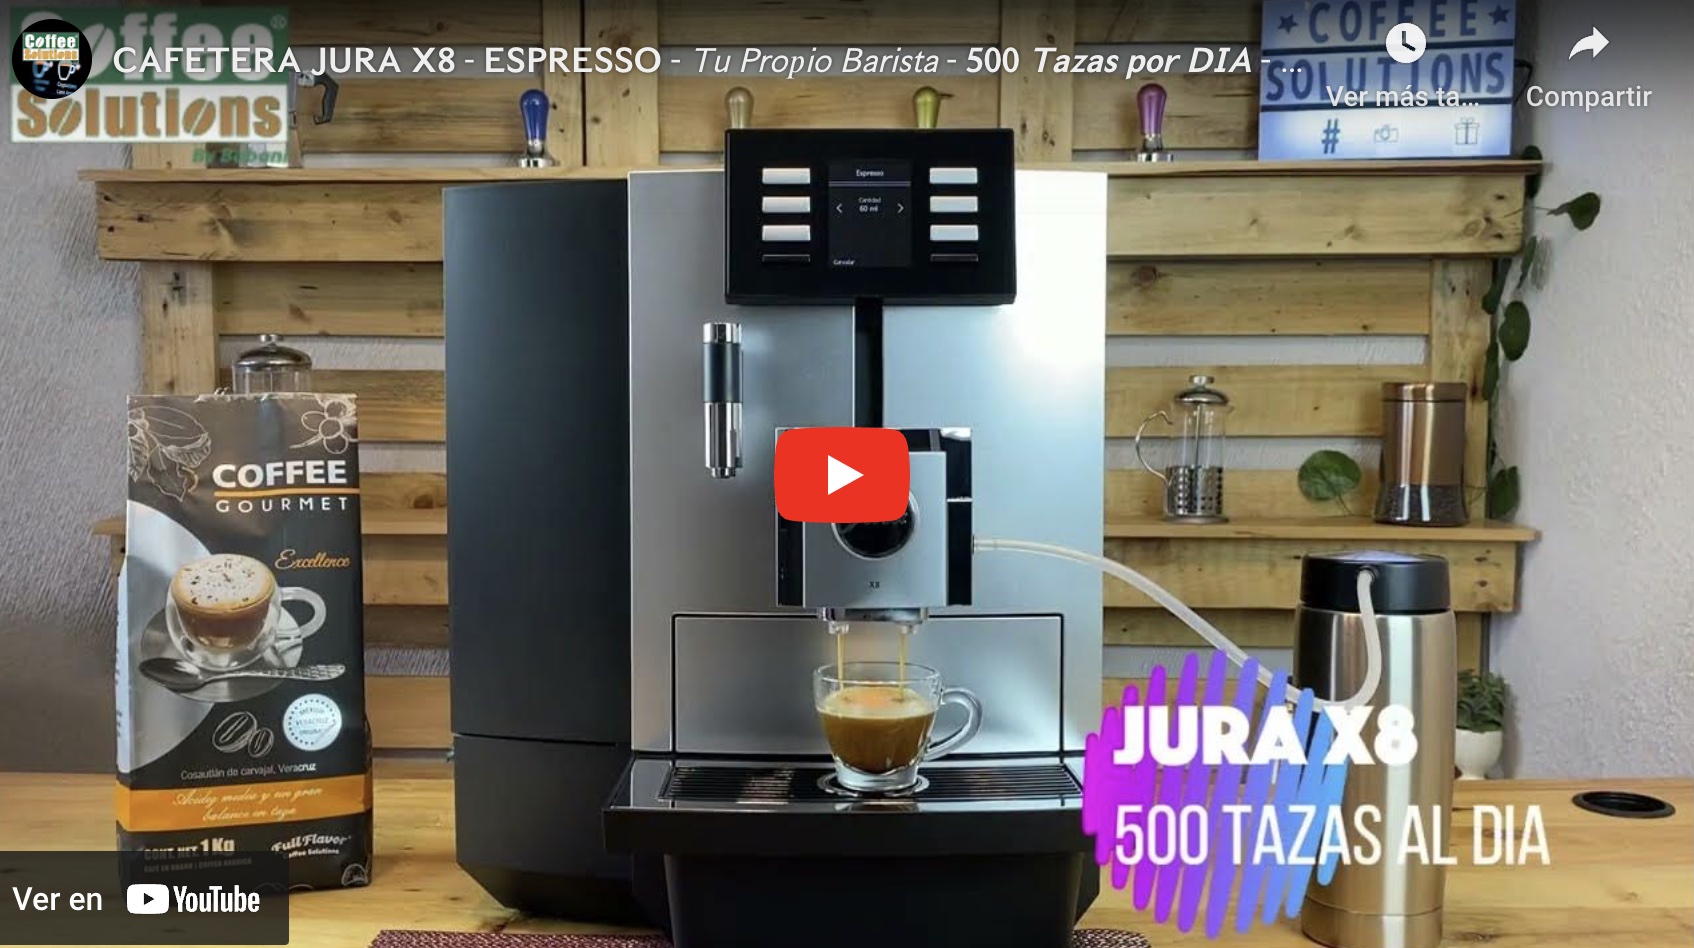 Cafetera X8 - Jura X8 - Cafetera Superautomatica X8